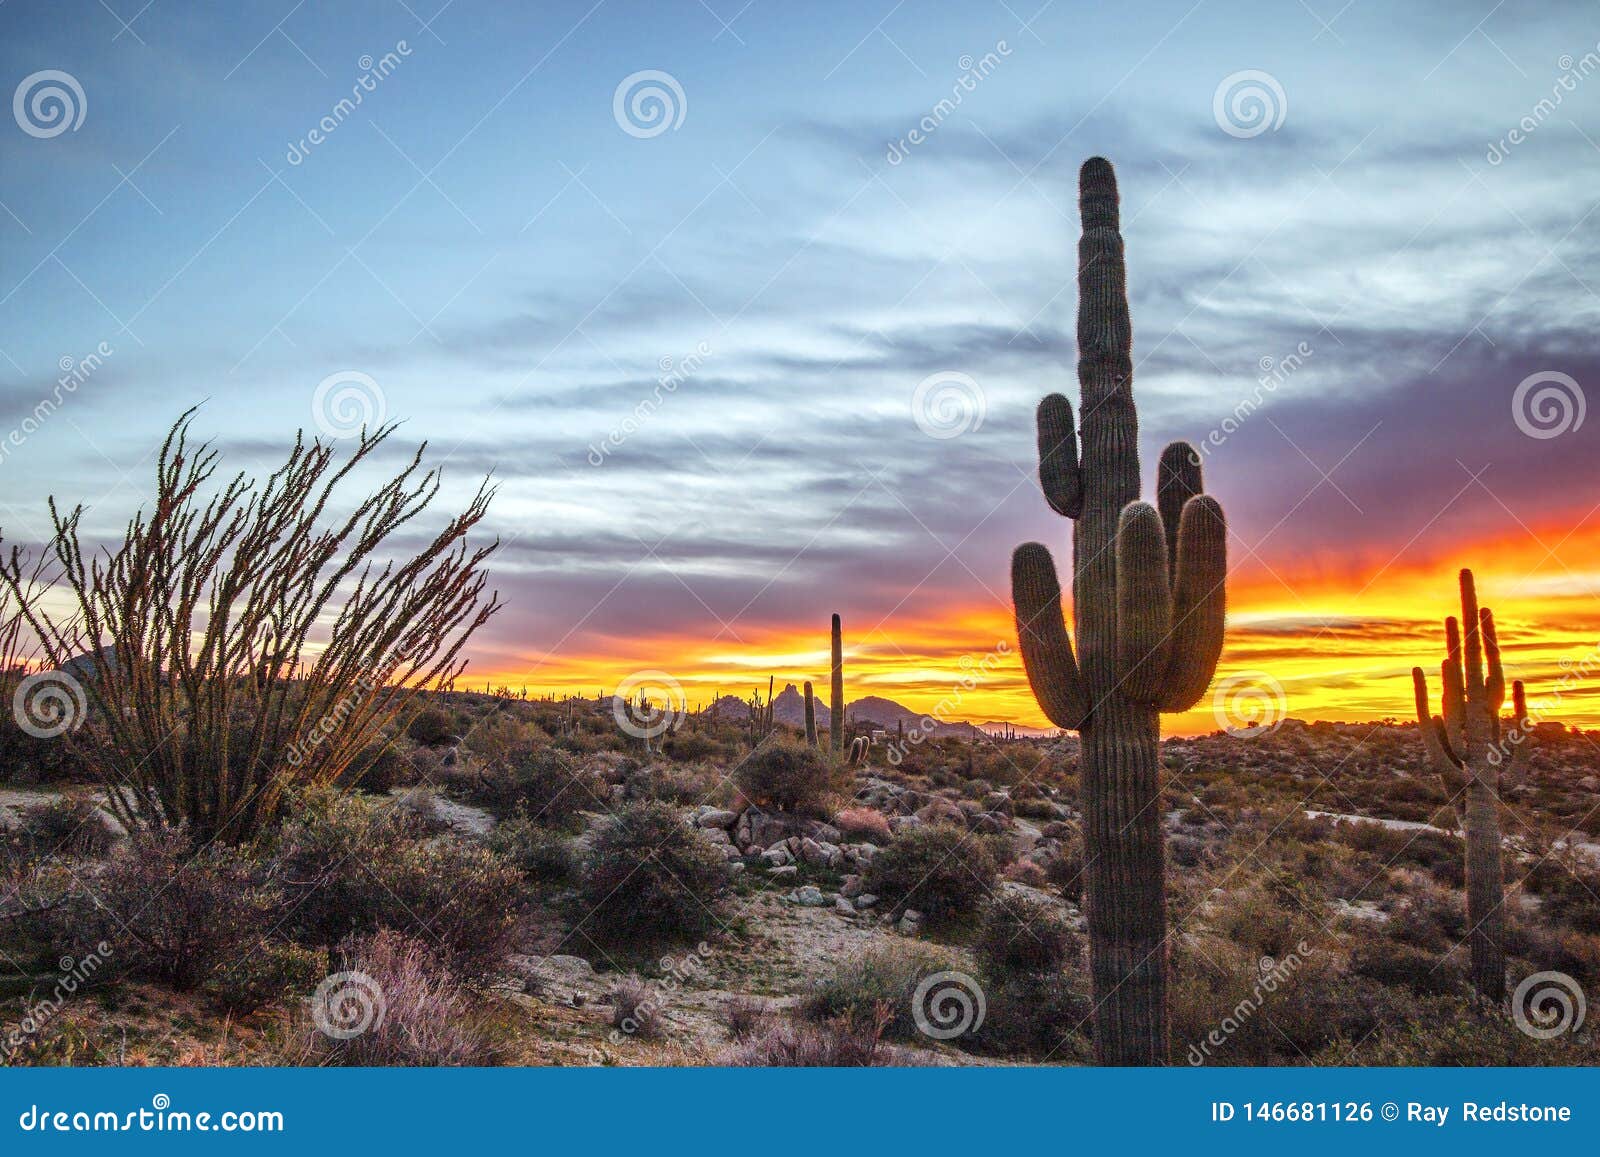 Saguaro Cactus with Vibrant Sunset Background Stock Photo - Image of ...